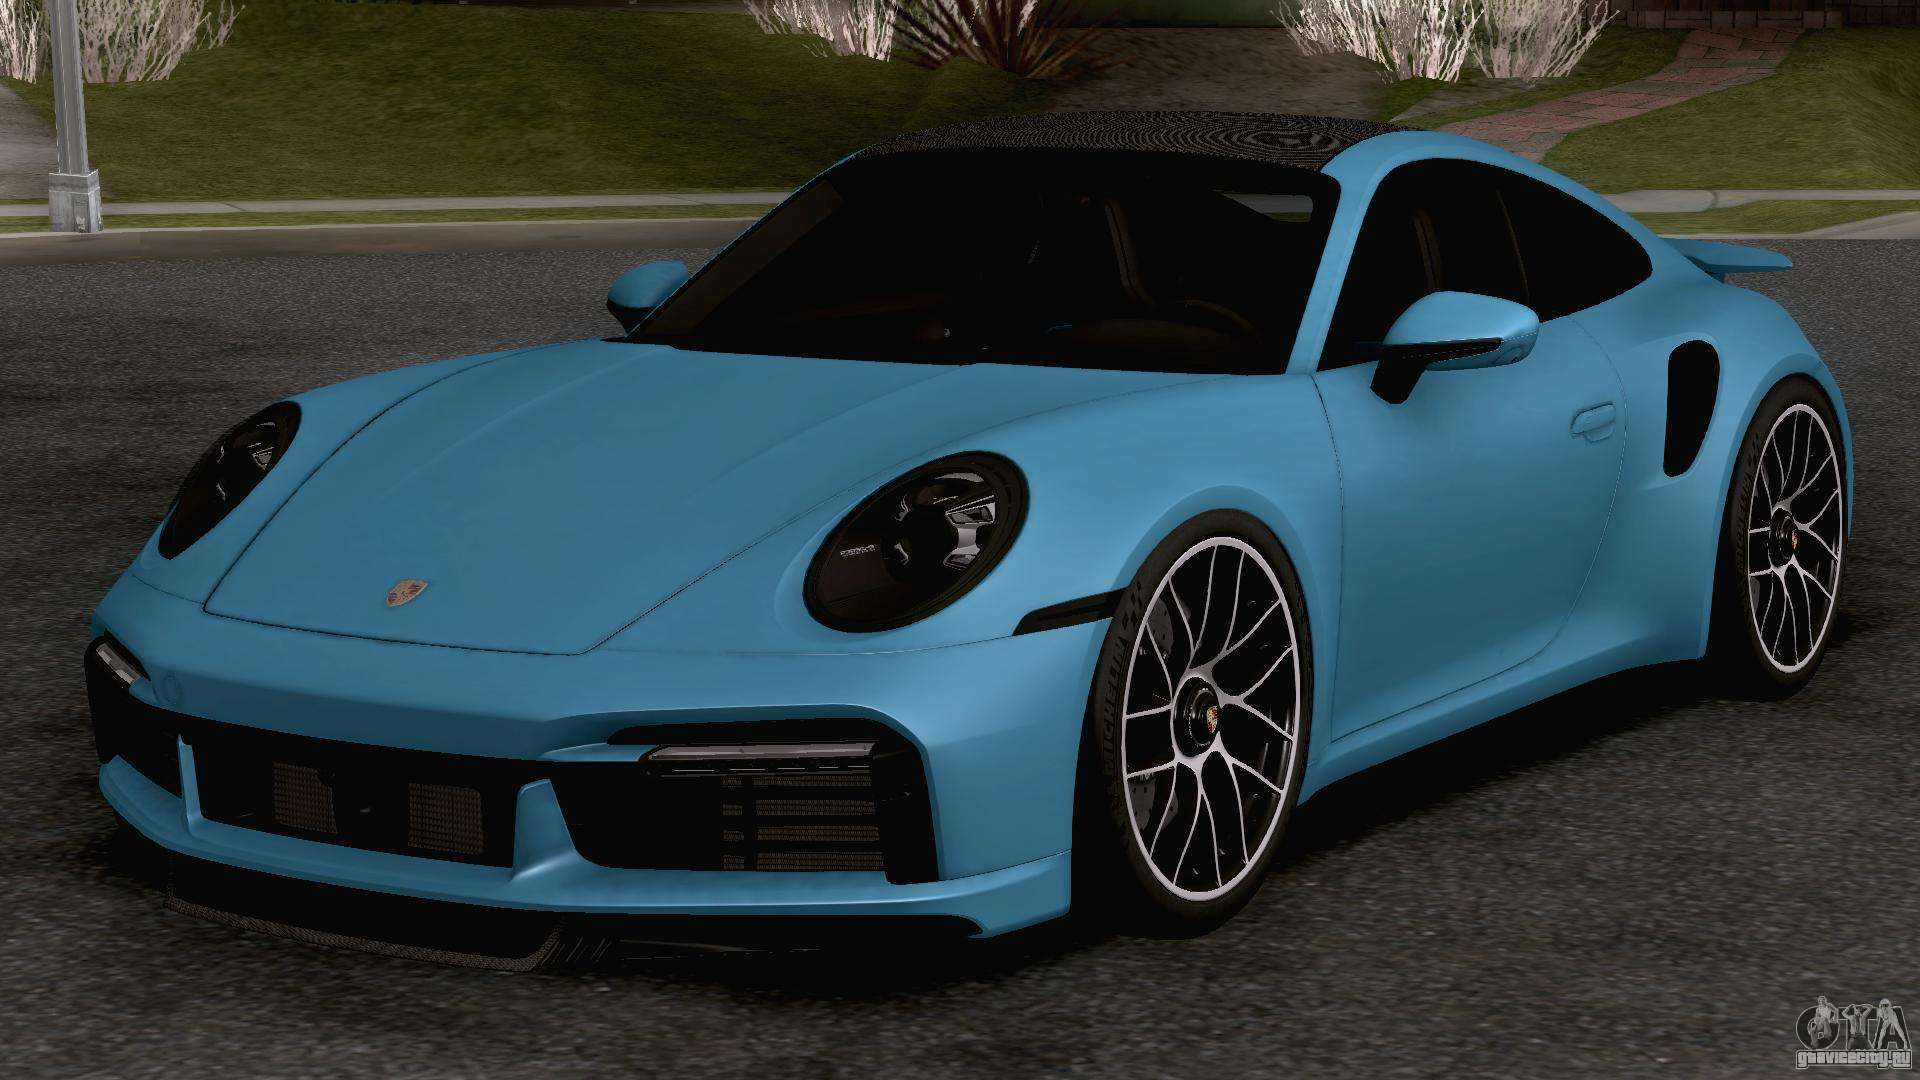 Porsche 911 turbo s для гта 5 фото 51